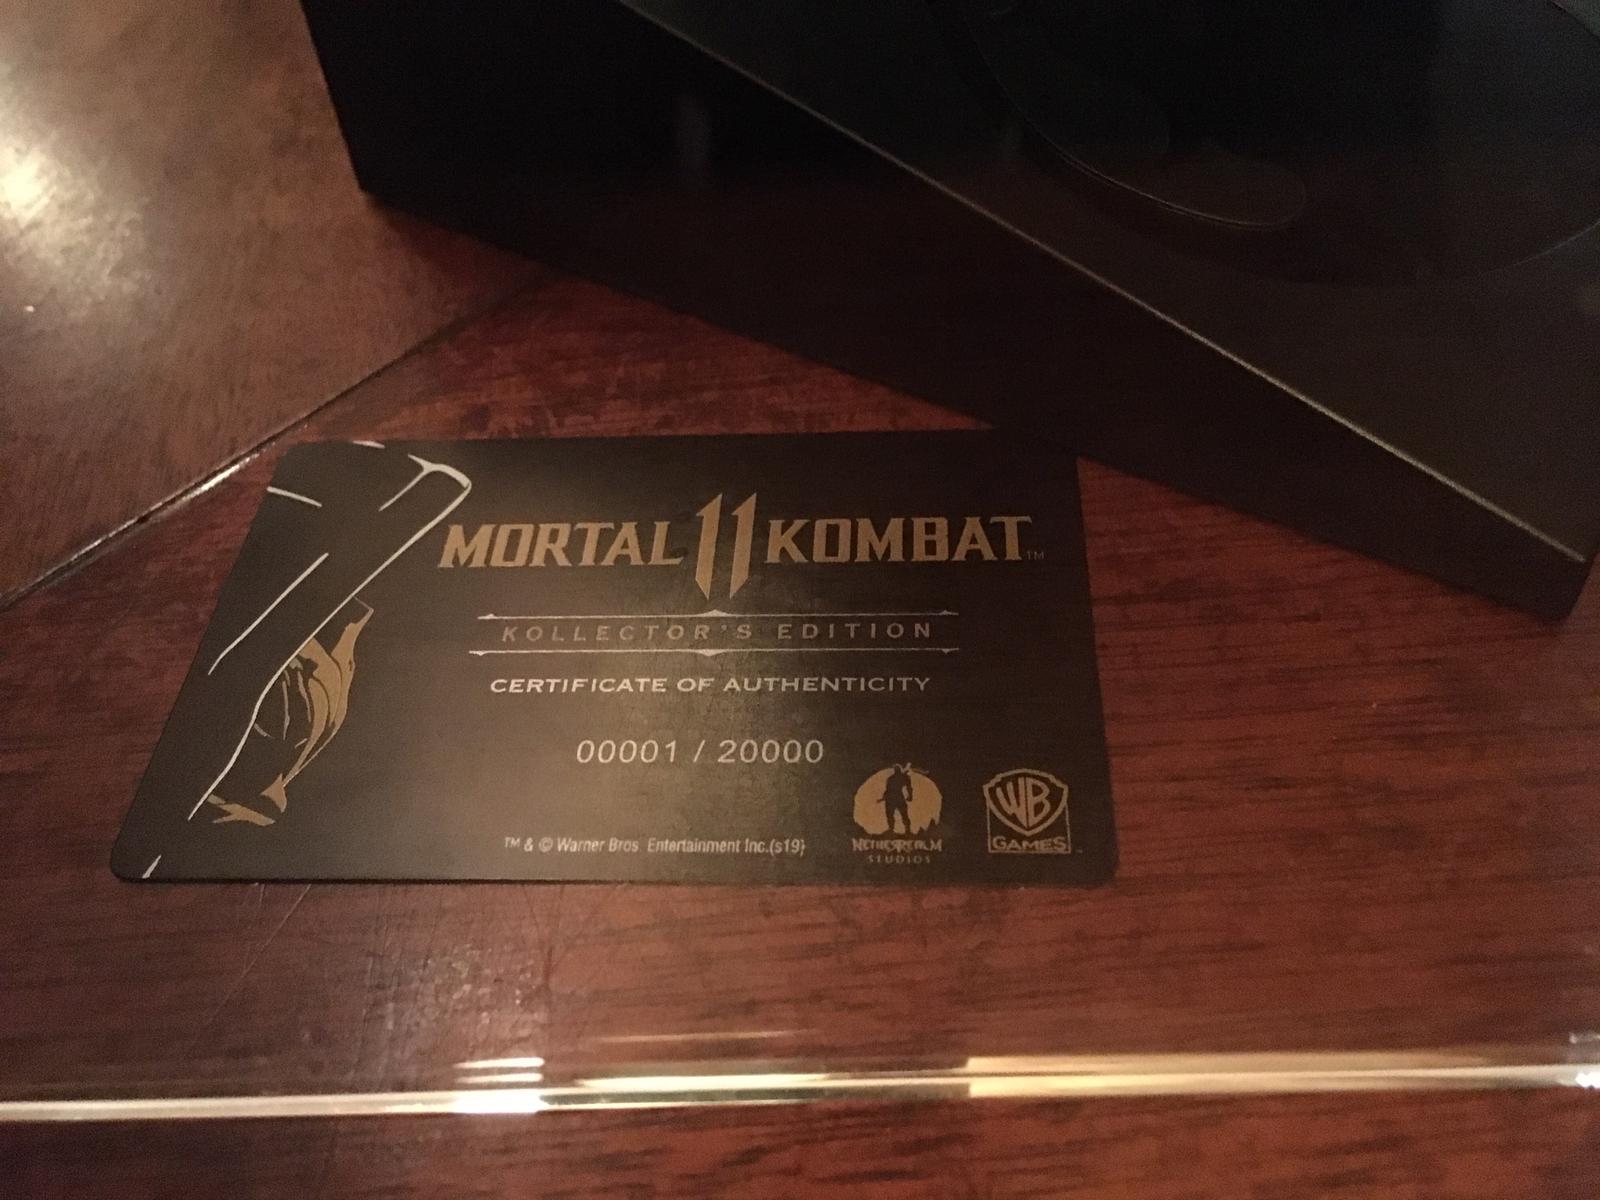 mortal kombat 11 edition ultimate